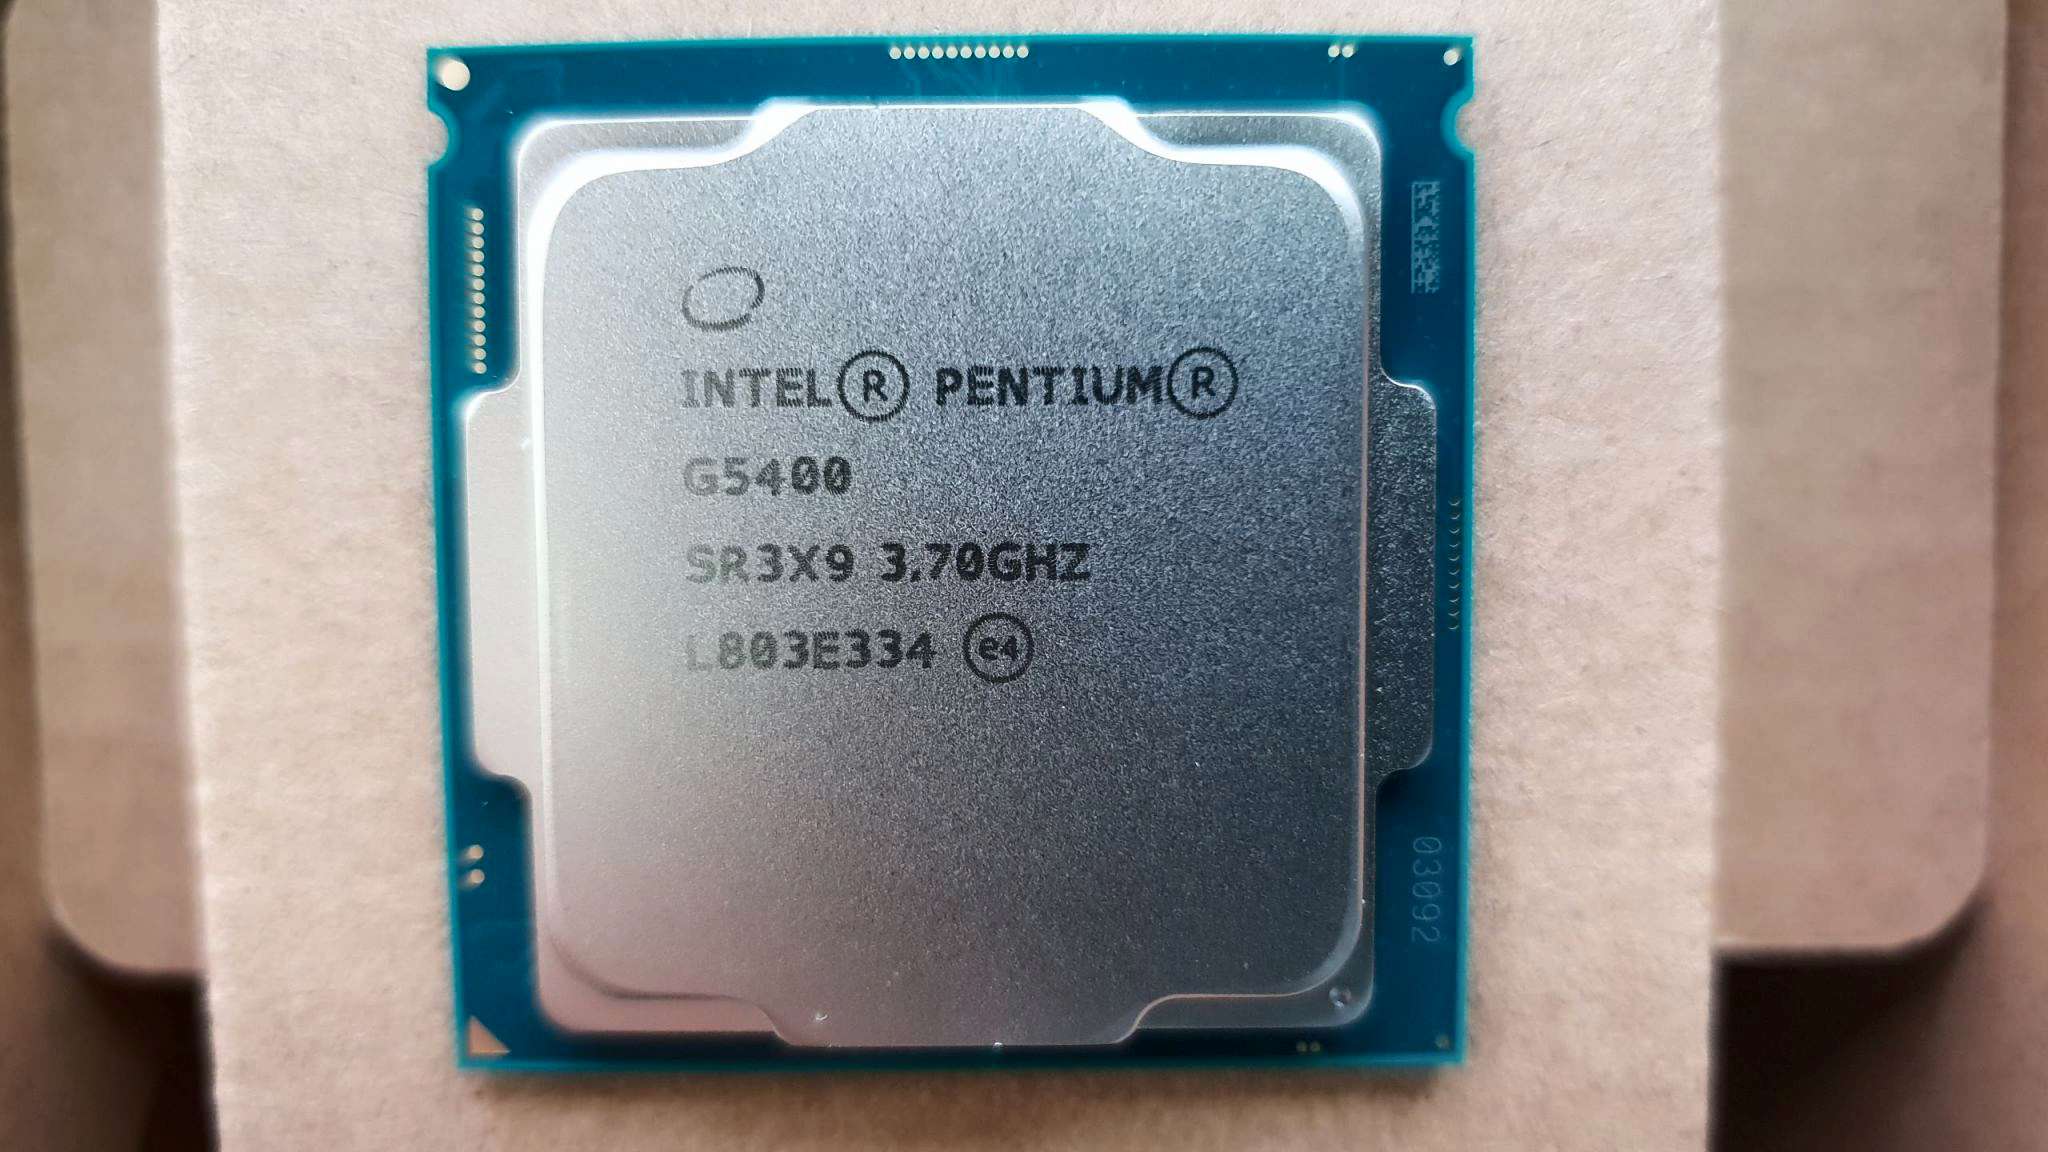 Intel core gold. Intel Gold g5400. Intel(r) Pentium(r) Gold g5400 CPU. Intel Pentium g5400. Intel(r) Pentium(r) Gold g5400 CPU @ 3.70GHZ 3.70 GHZ.